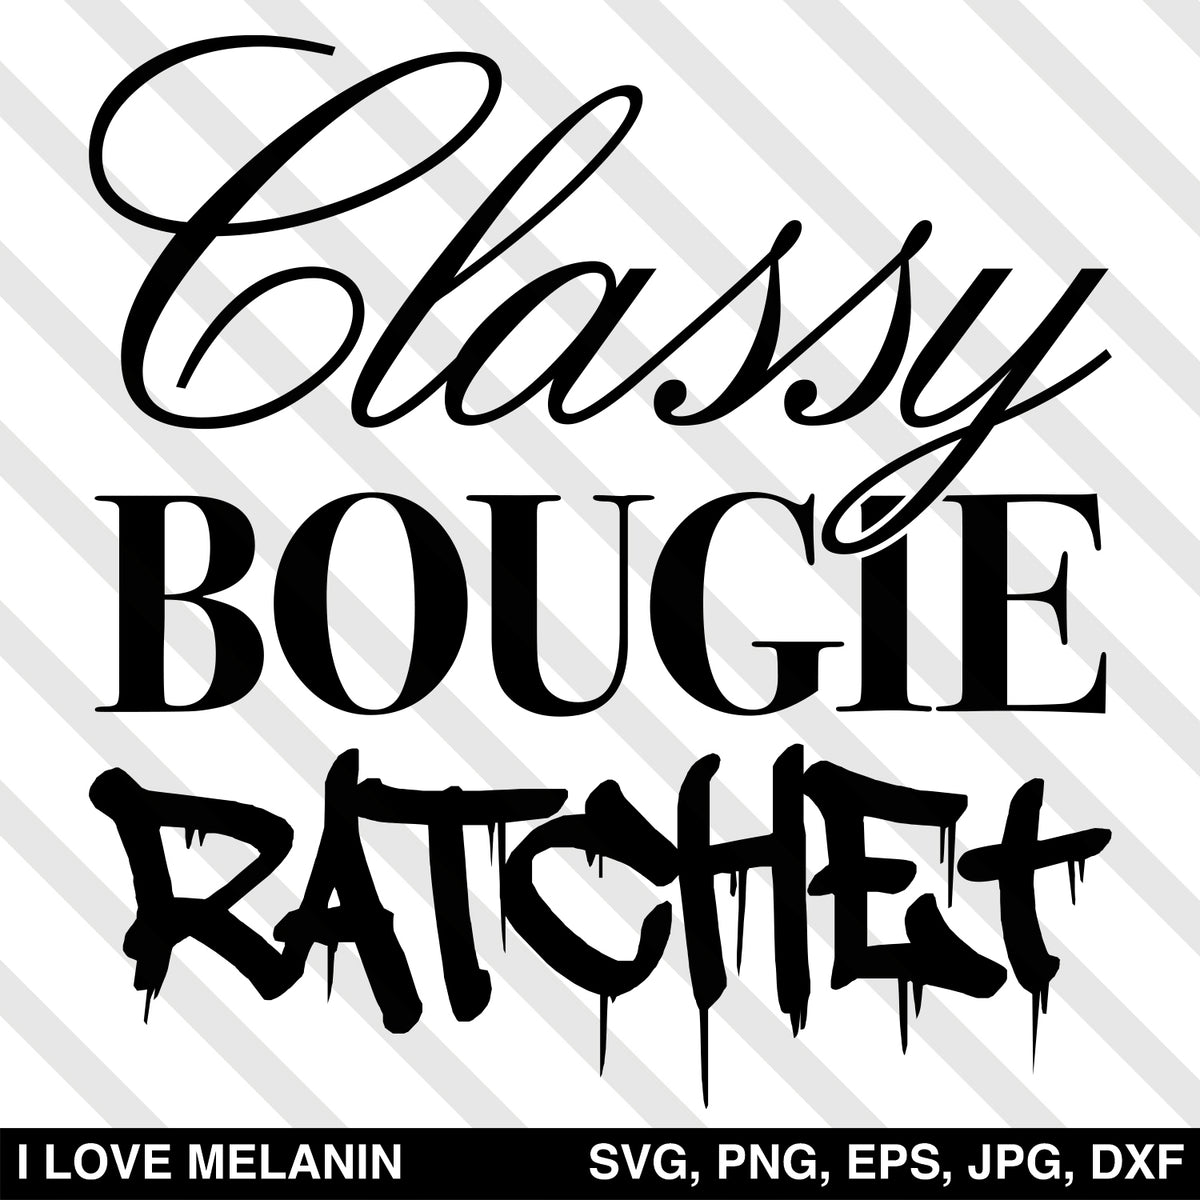 Classy Bougie Ratchet Svg I Love Melanin